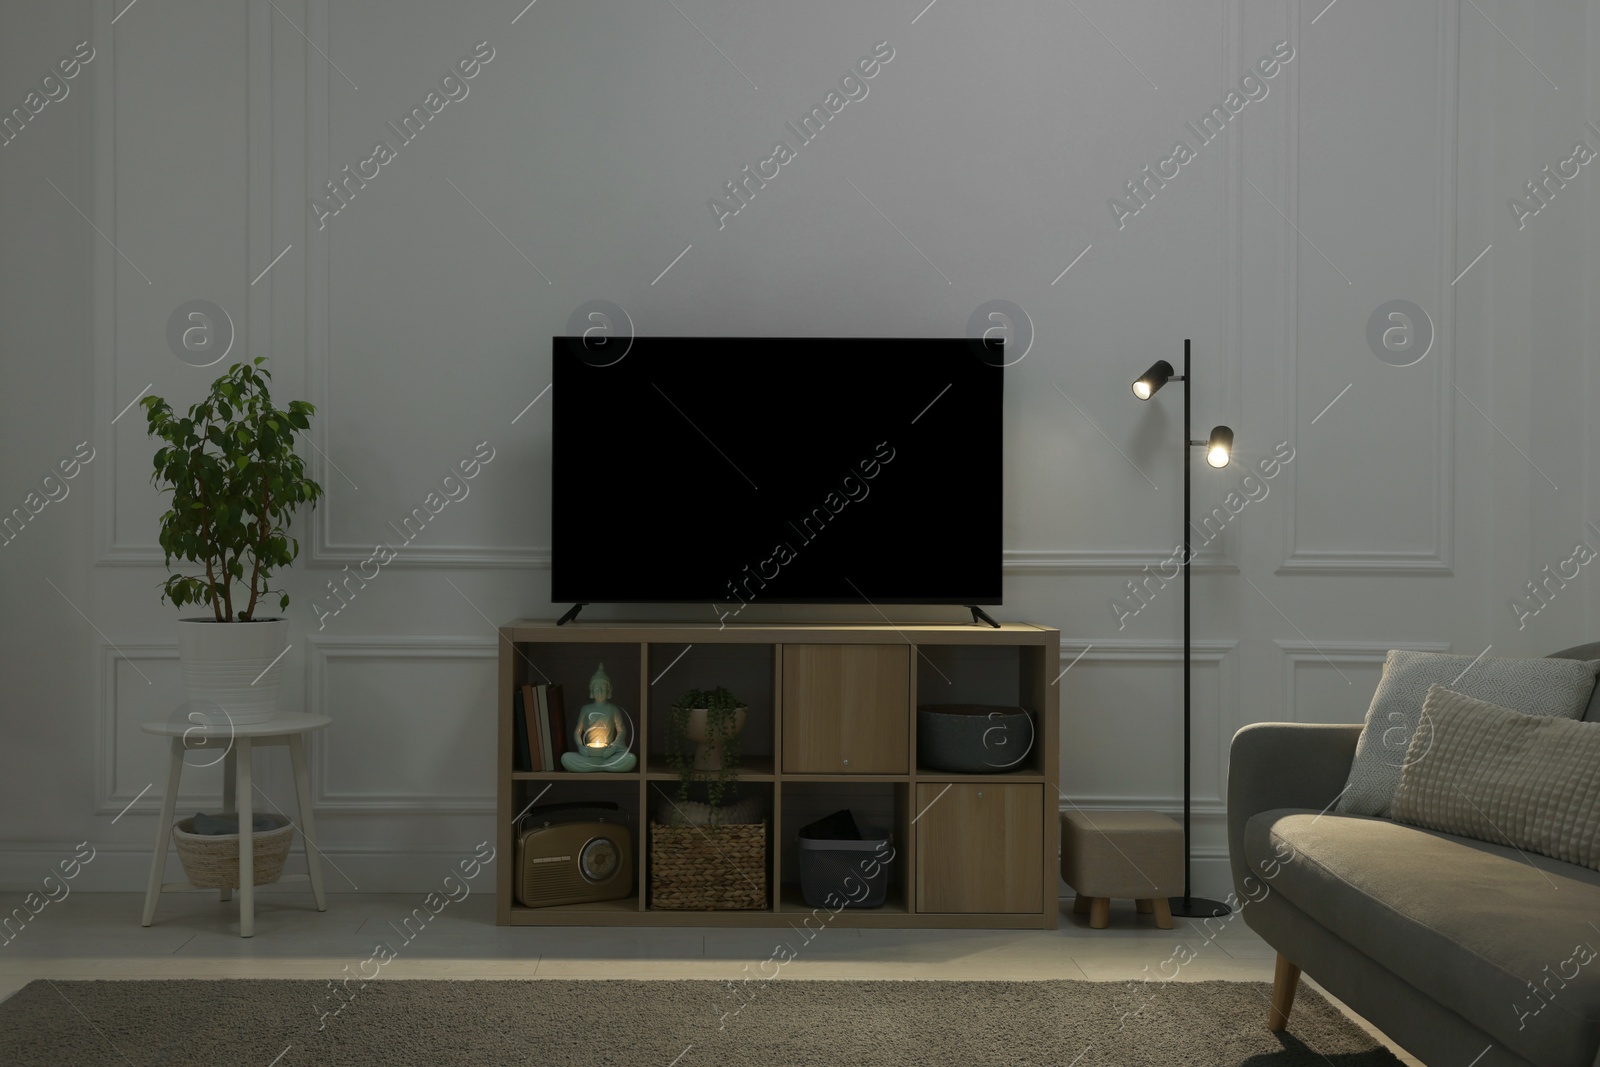 Photo of Modern TV on cabinet, sofa and beautiful houseplants indoors. Interior design